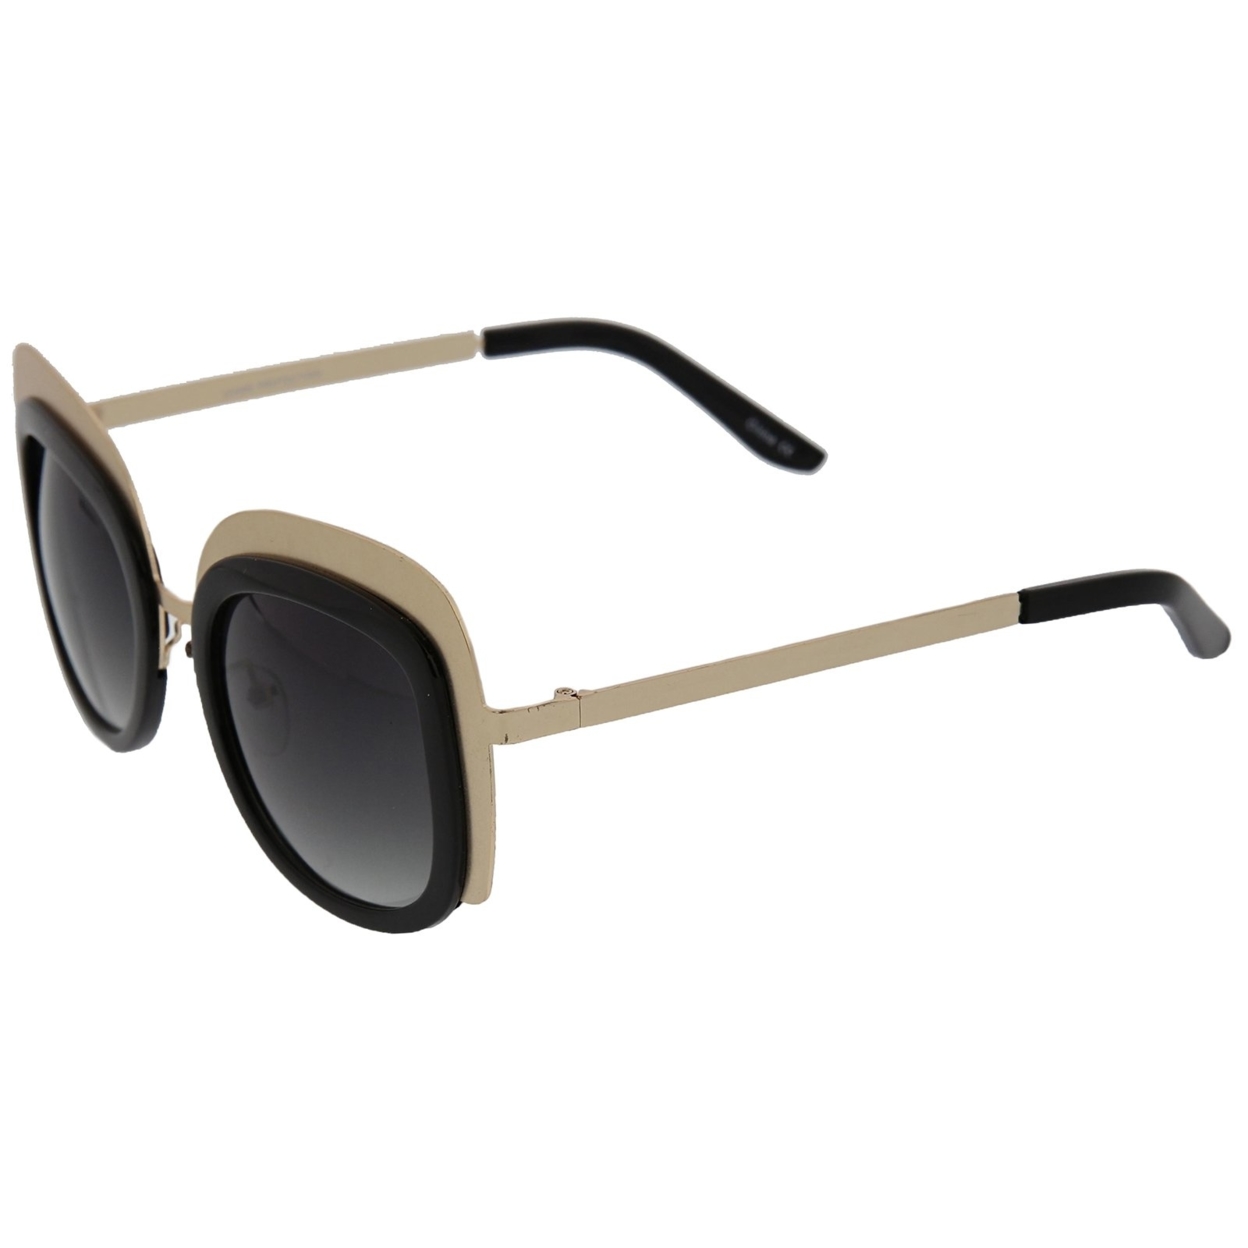 Women's Oversize Two-Tone Metal Frame Border Square Sunglasses 43mm - Gold-Black / Lavender